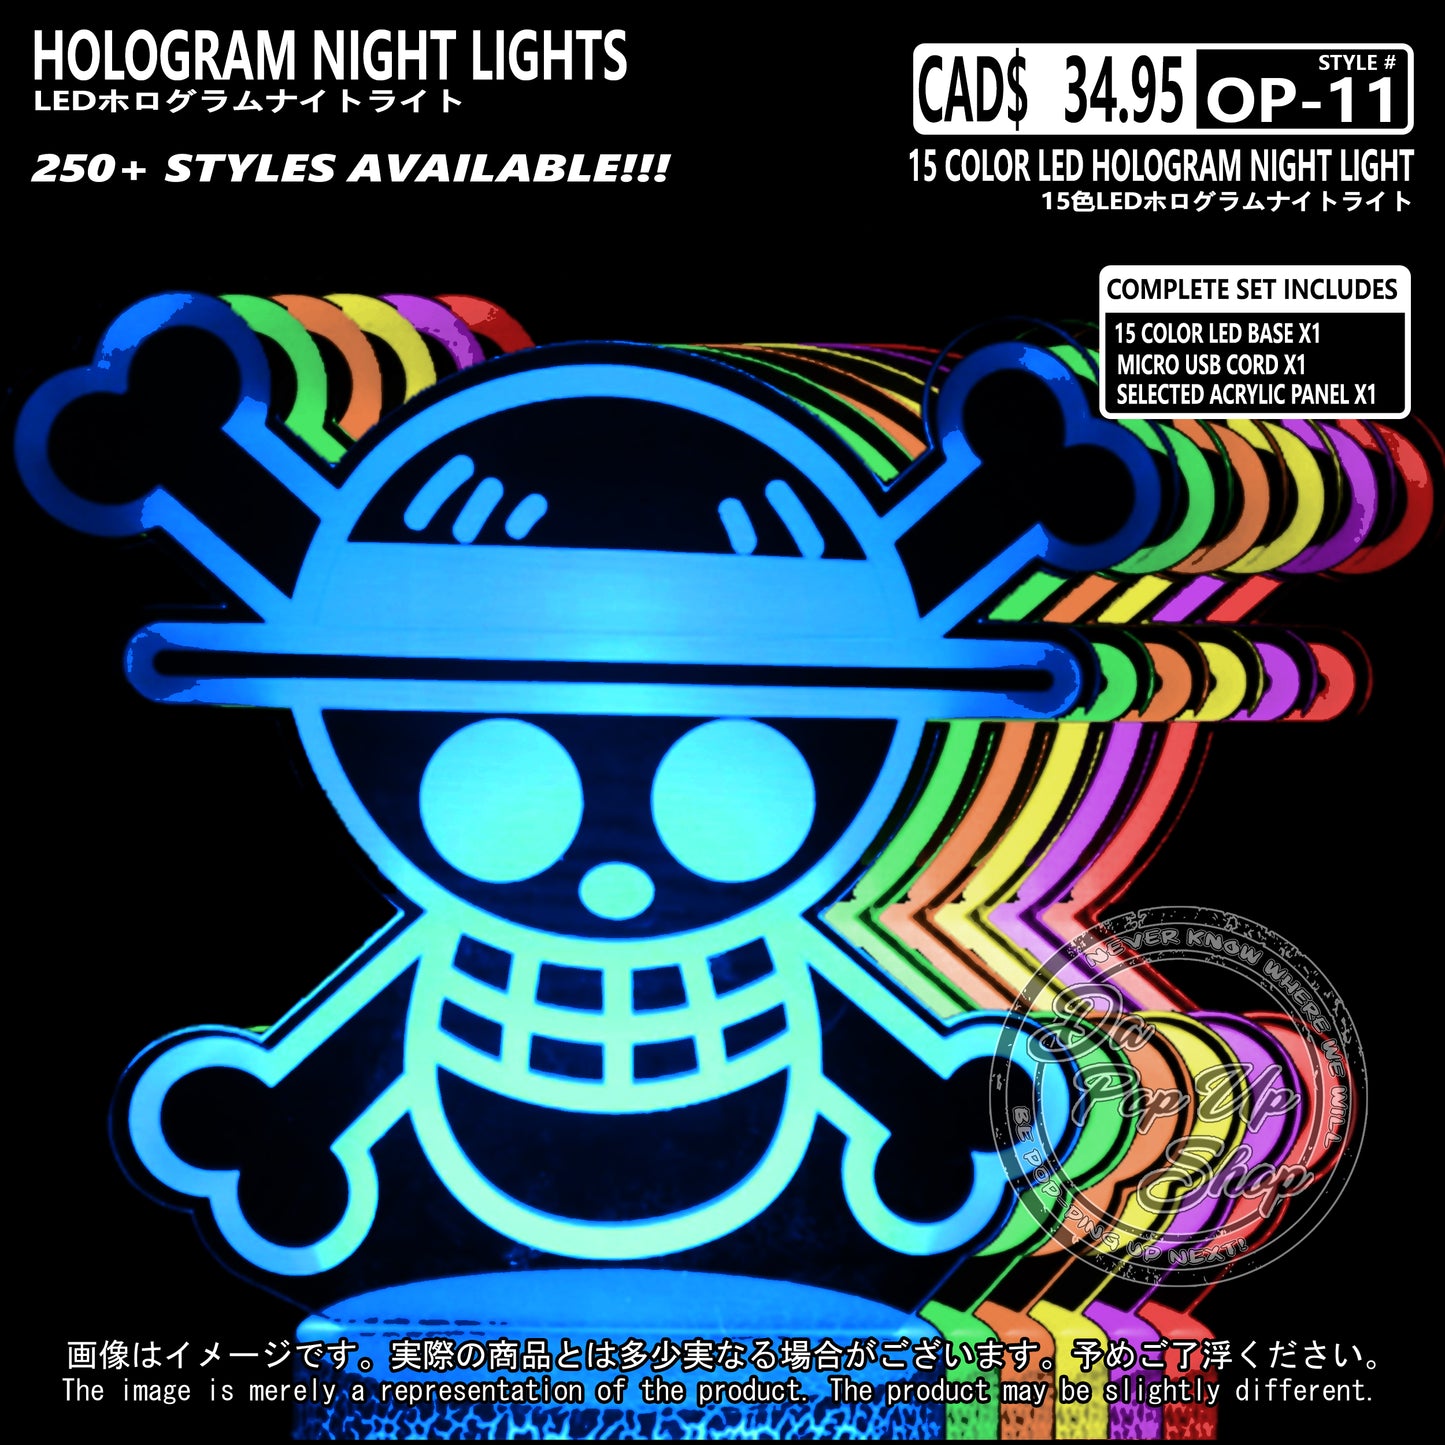 (OP-11) One Piece Hologram LED Night Light